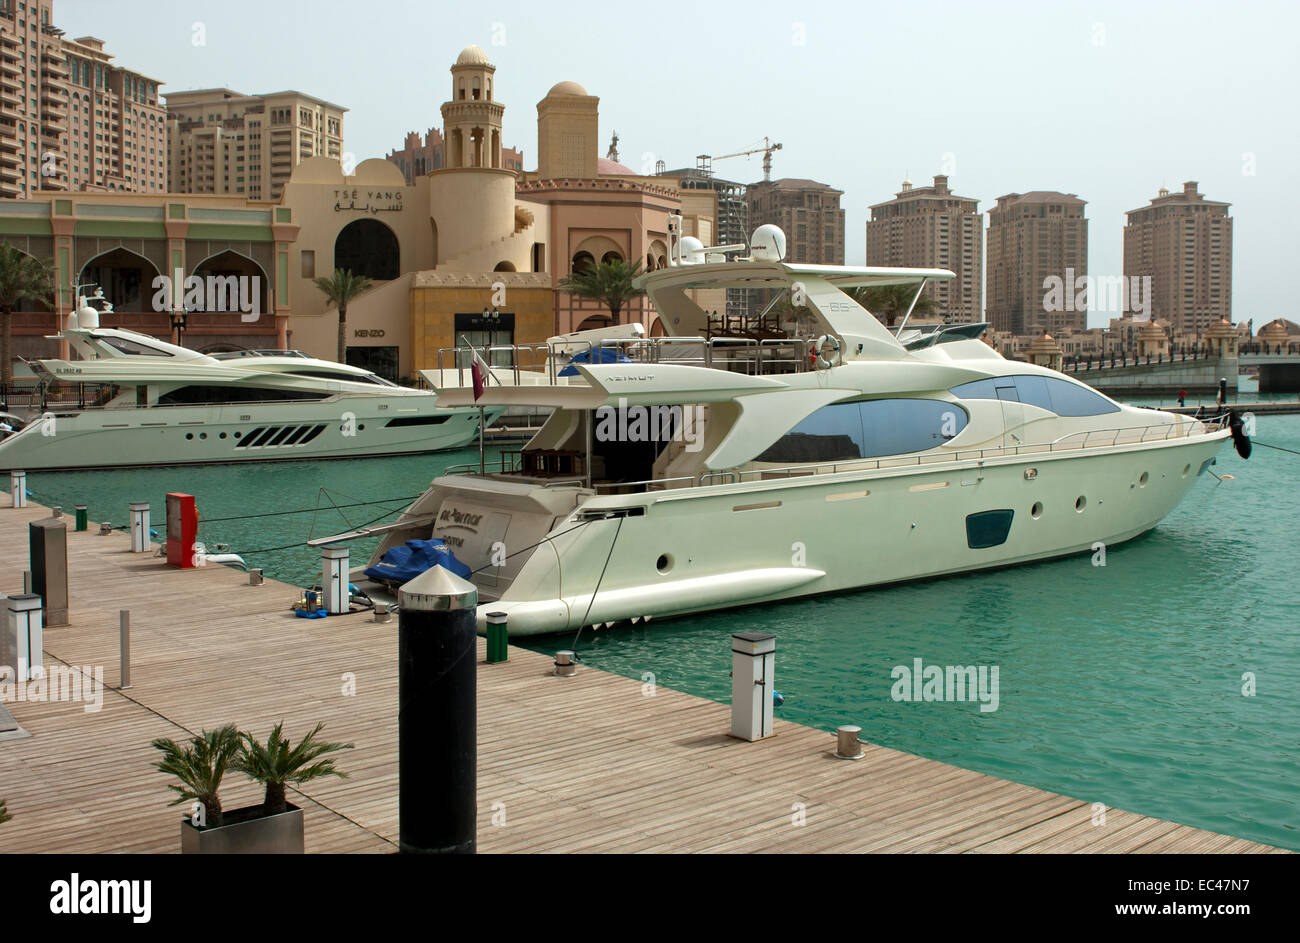 Marina Porto saoudite dans la zone résidentielle la perle, Doha, Qatar Banque D'Images